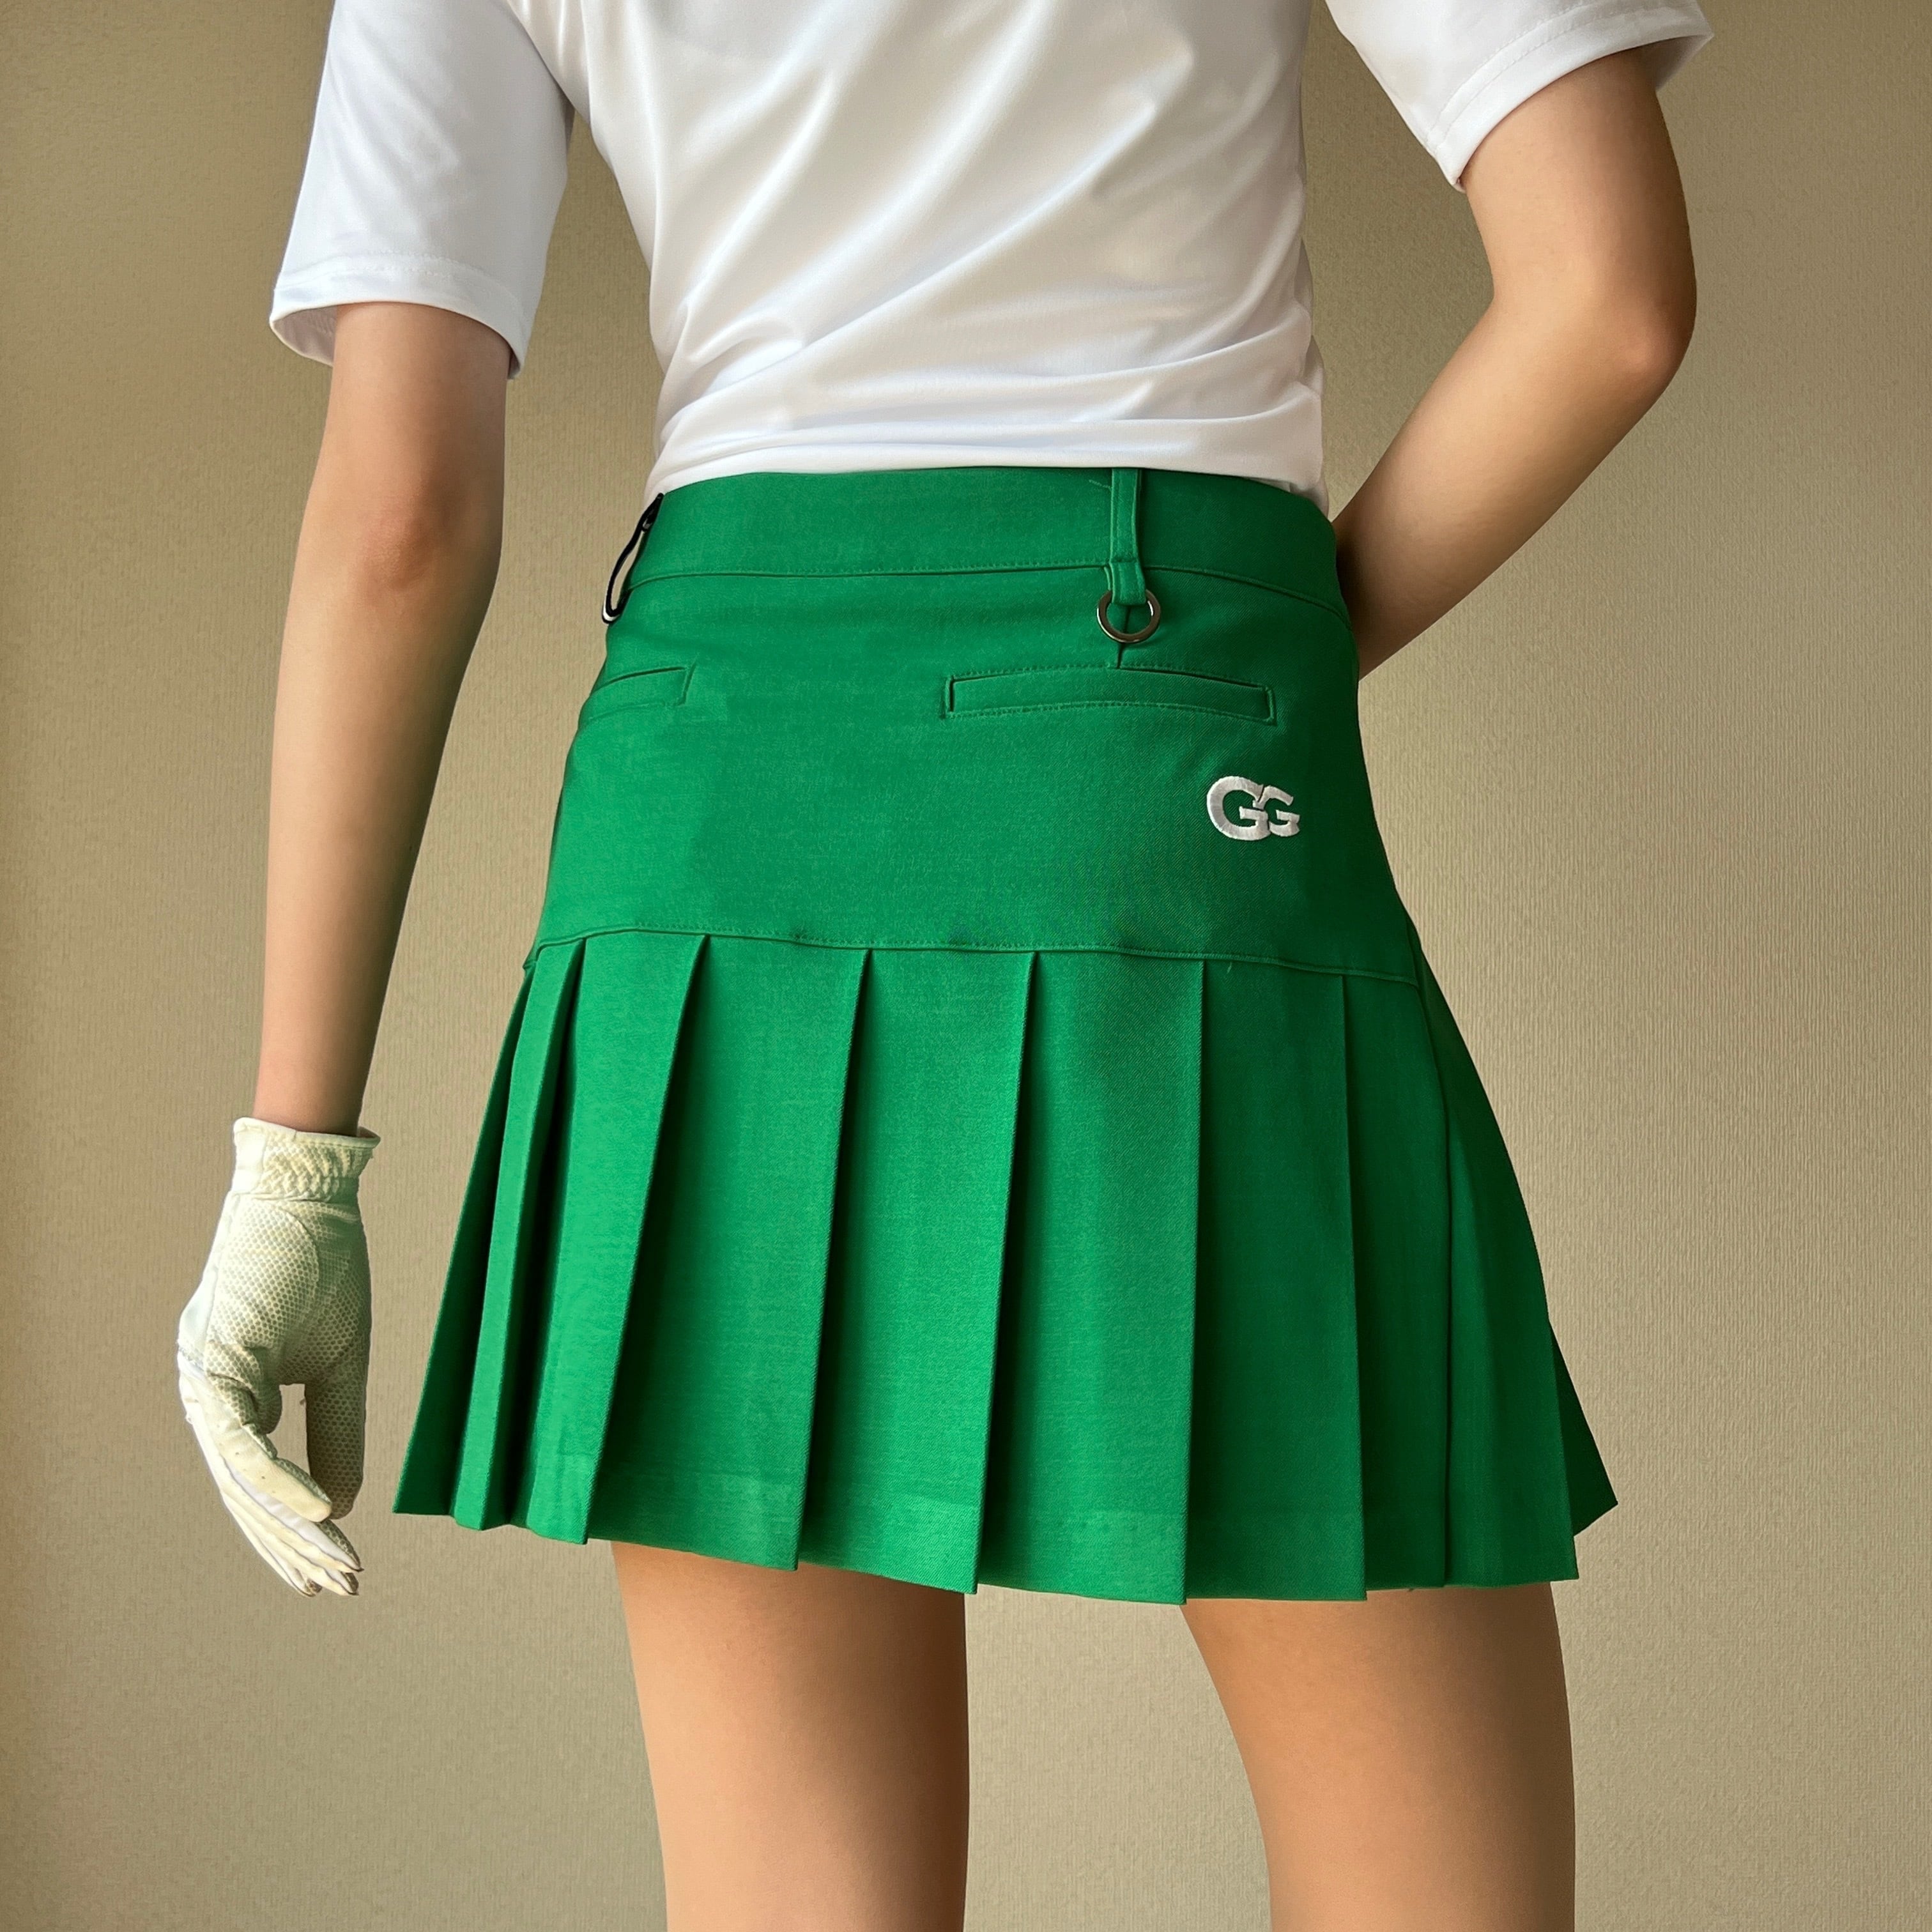 GGプリーツスカート(Green) | R.E.M GOLF｜韓国ゴルフウェア通販サイト powered by BASE